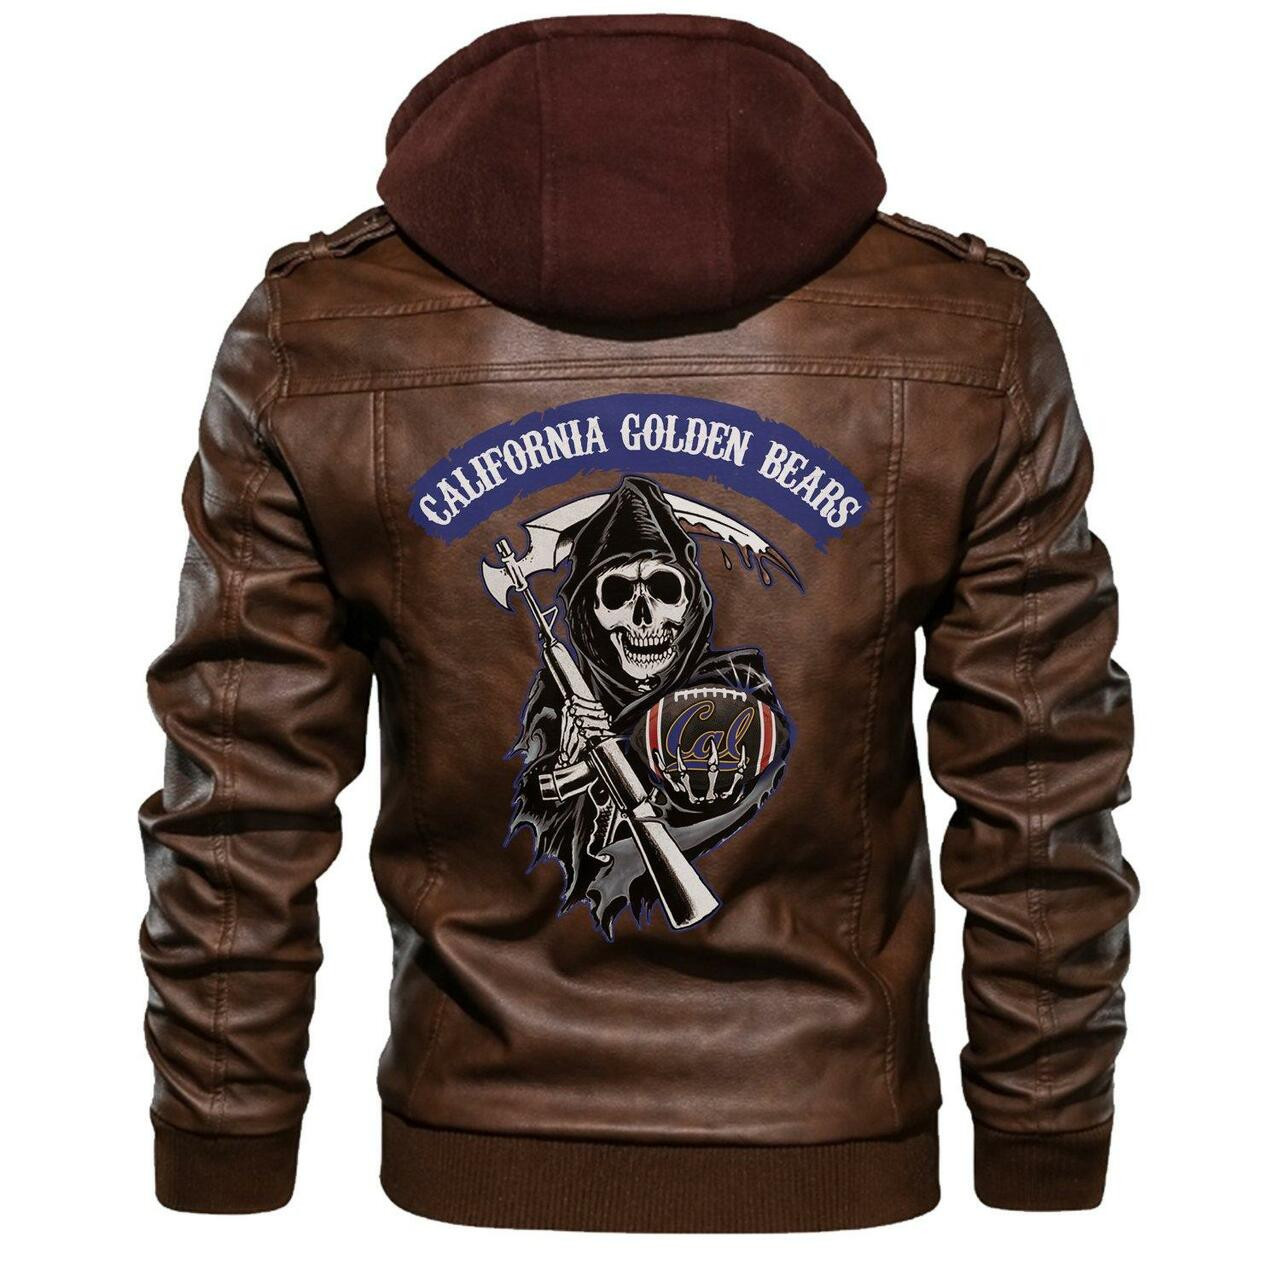 Top leather jacket Sells Best on Techcomshop 55